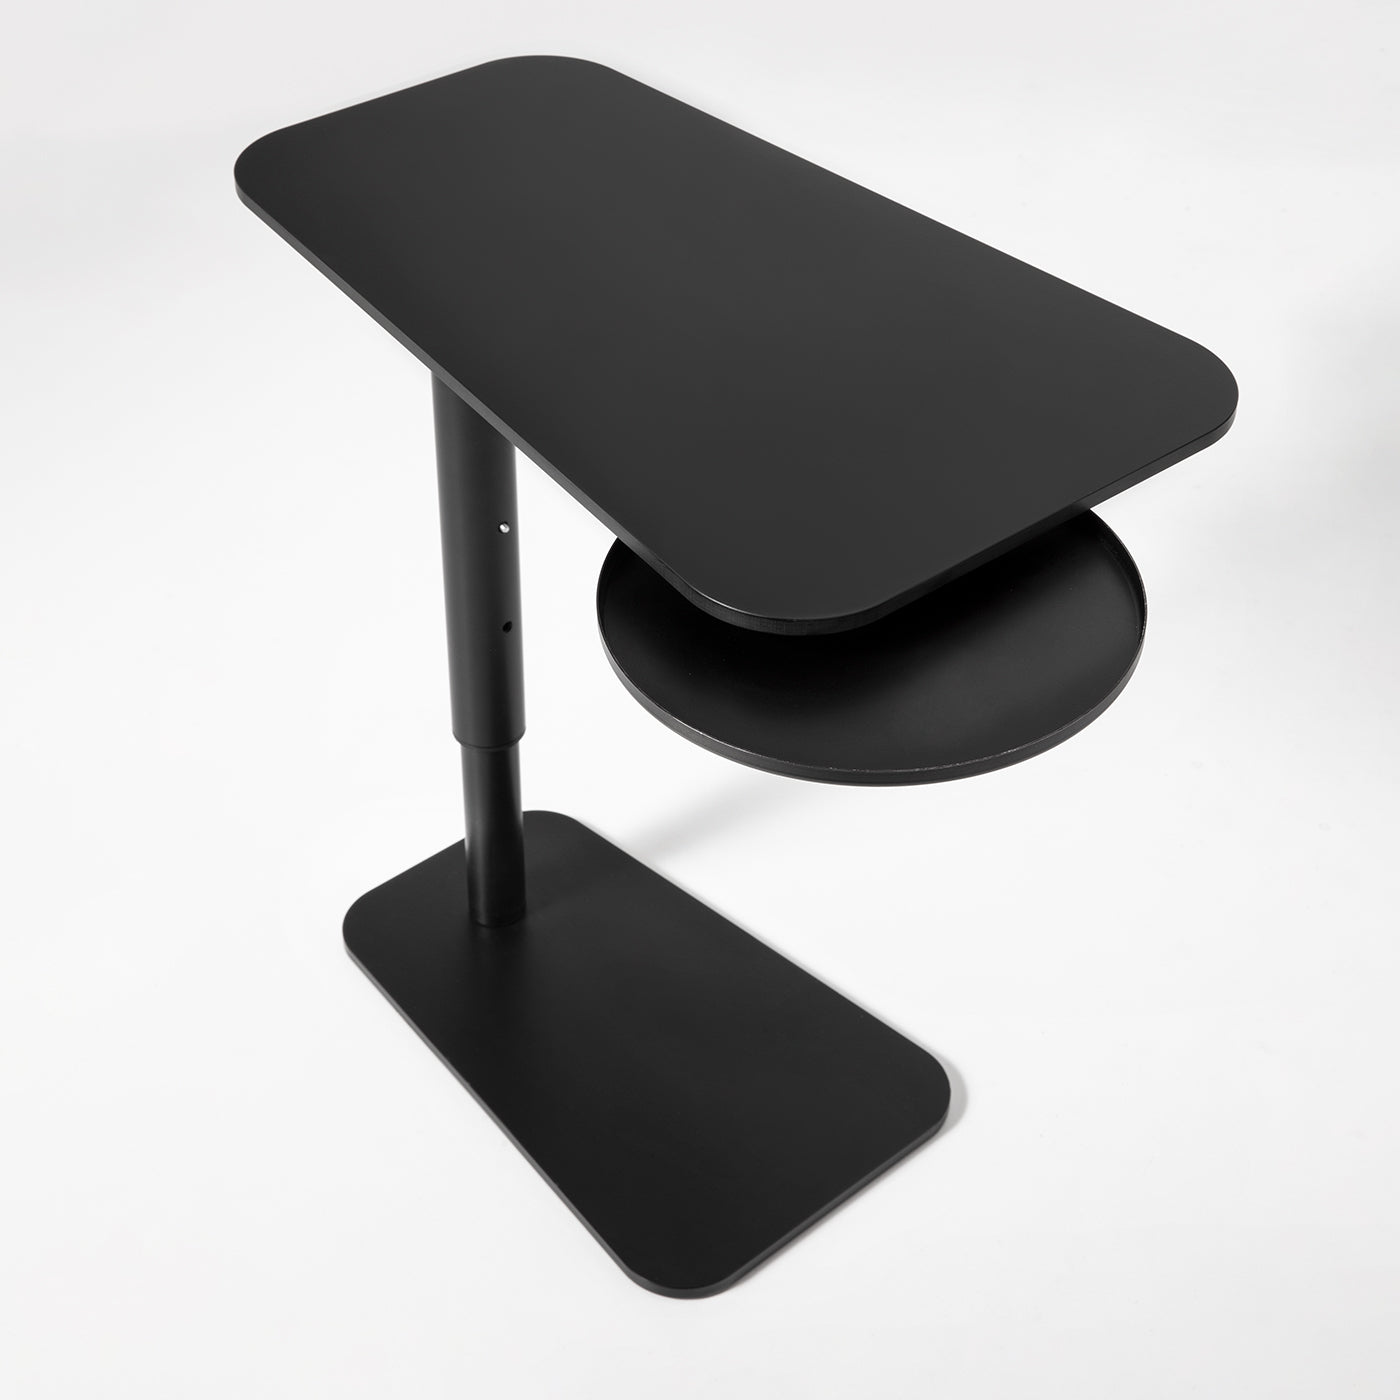 0130 Jens Black Side Table by Massimo Broglio - Alternative view 3